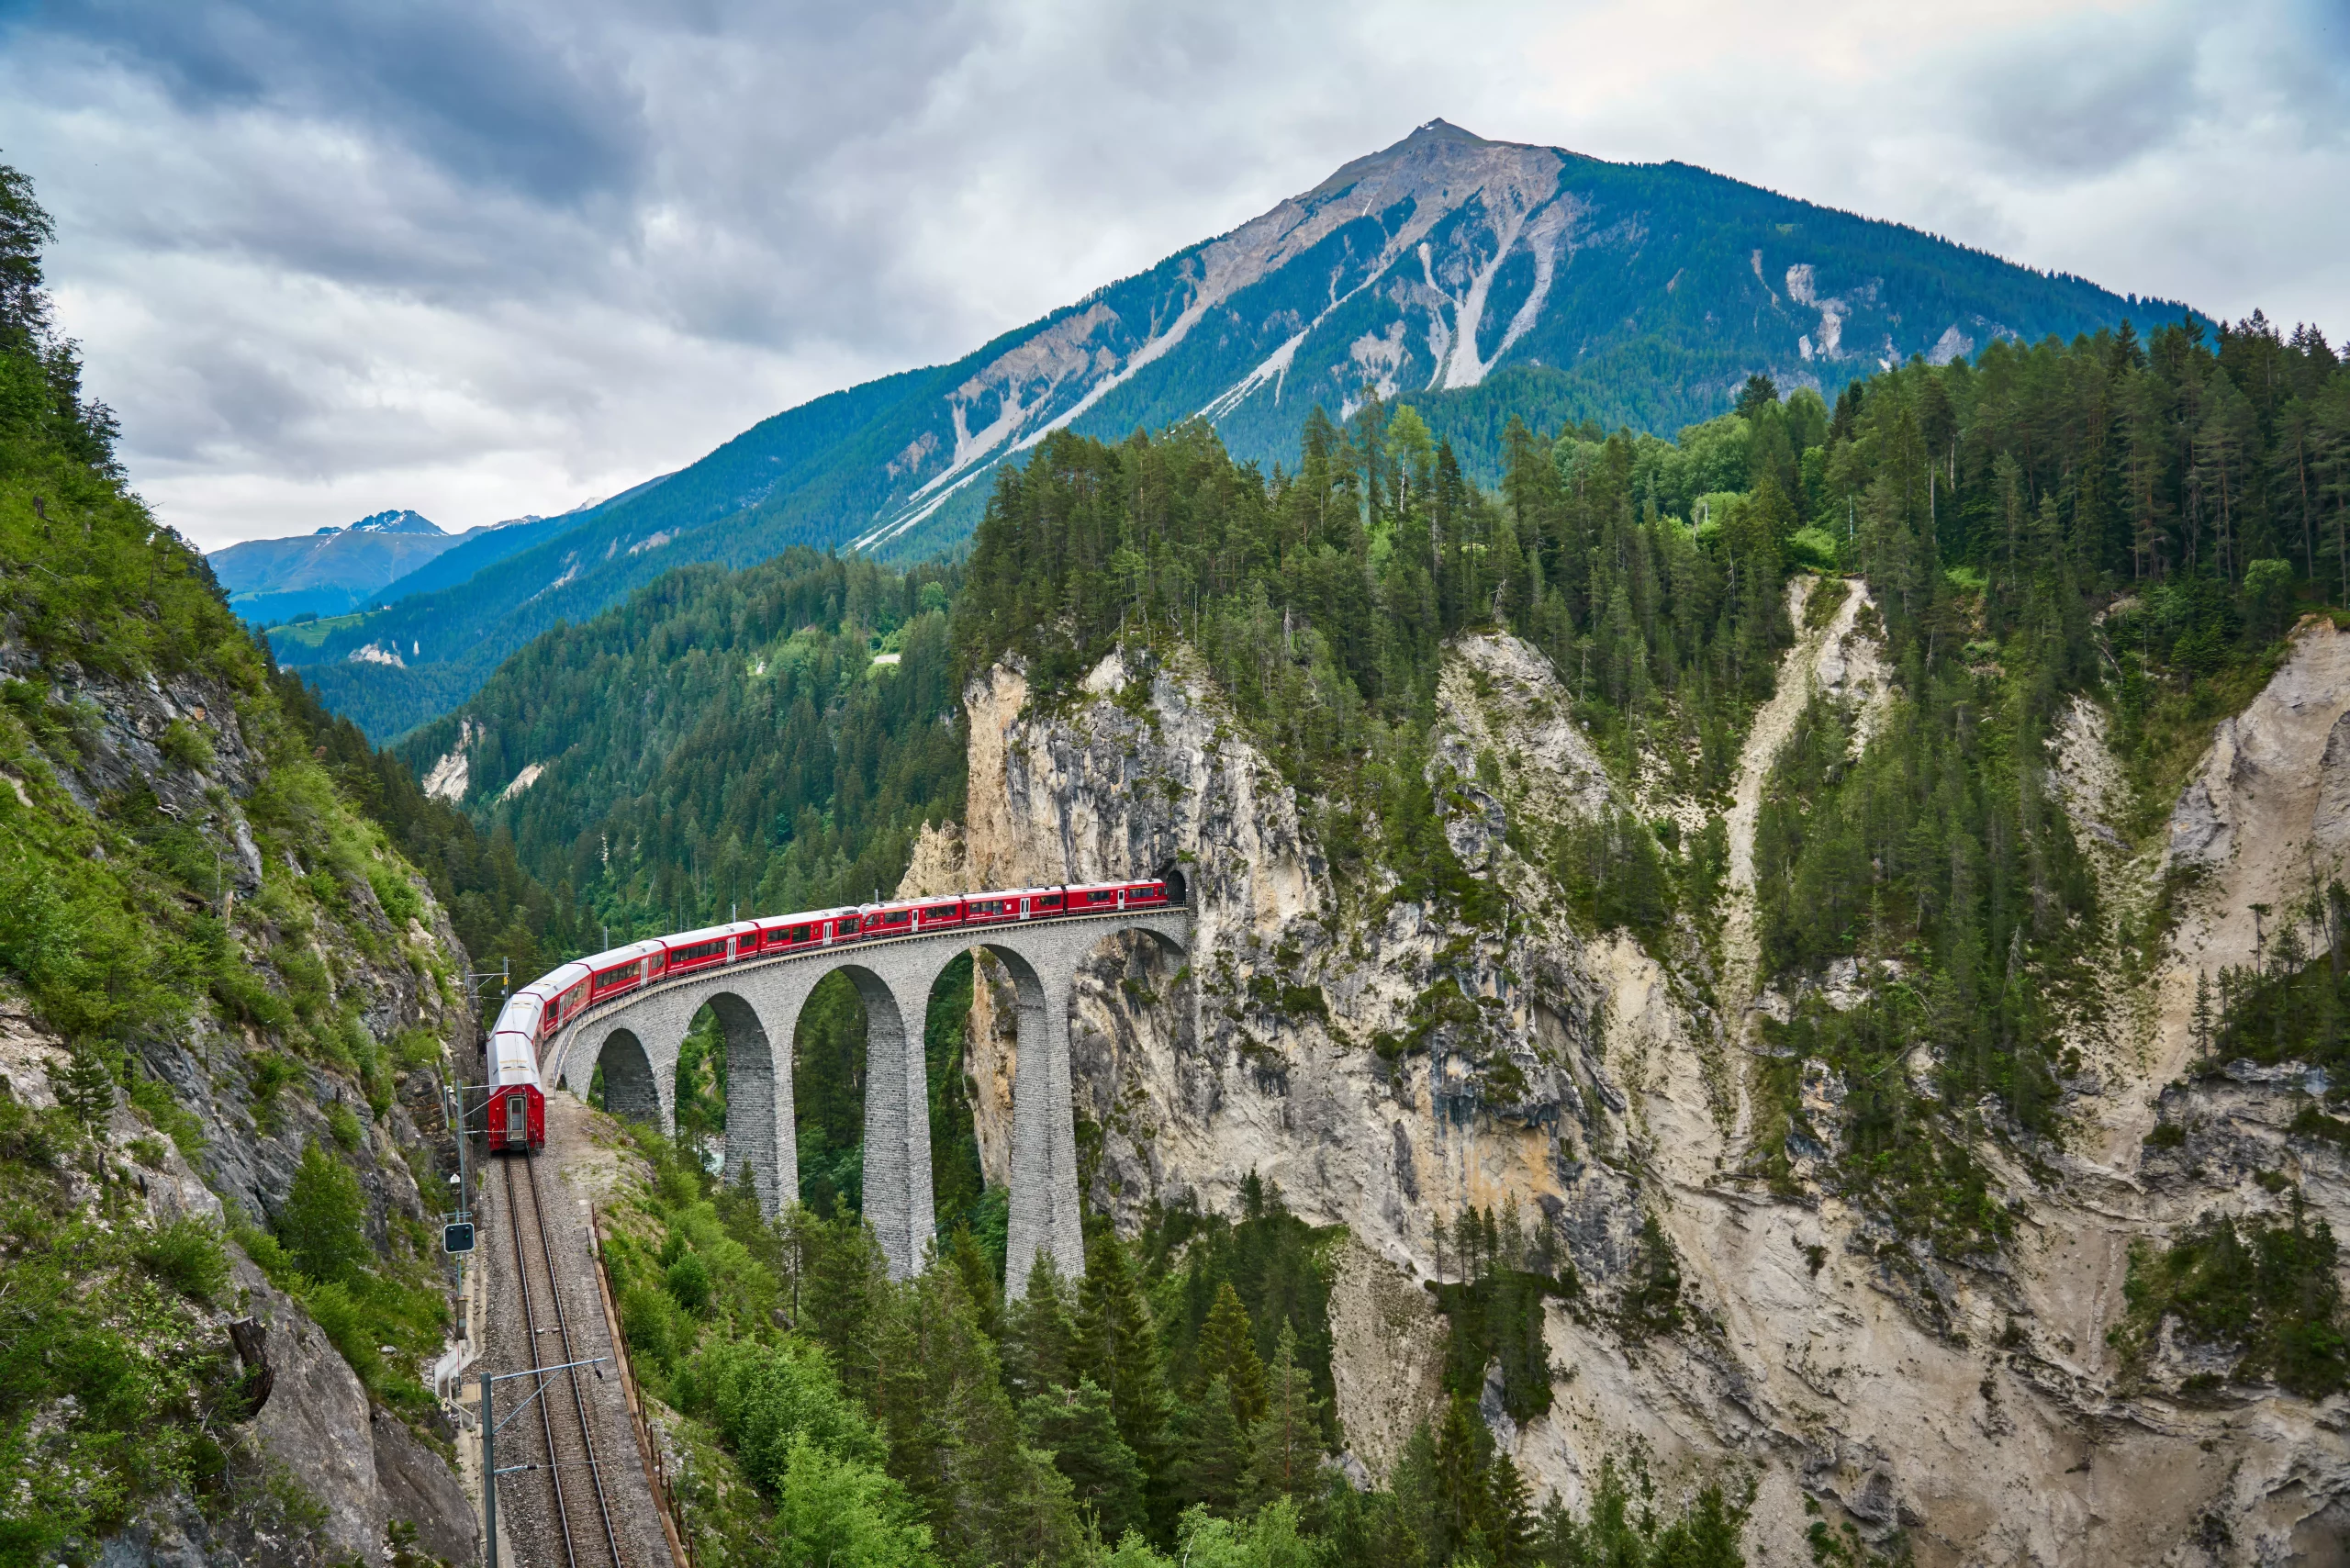  Glacier Express uses this railroad